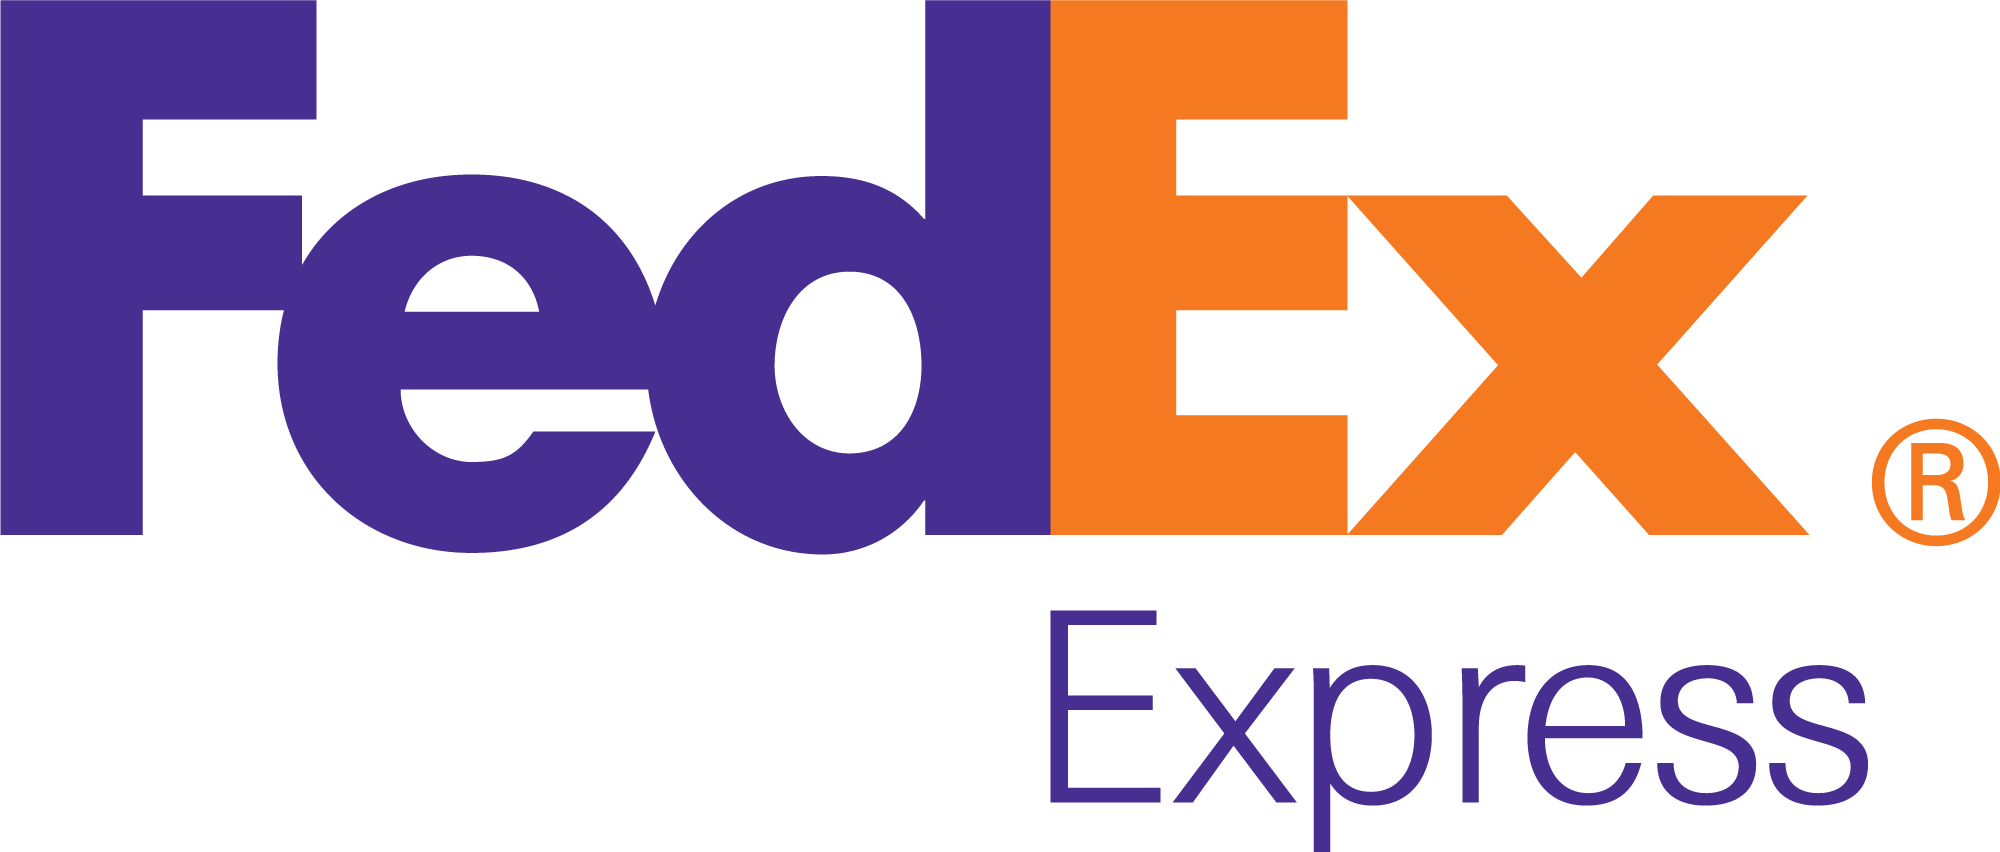 fedex express logo png